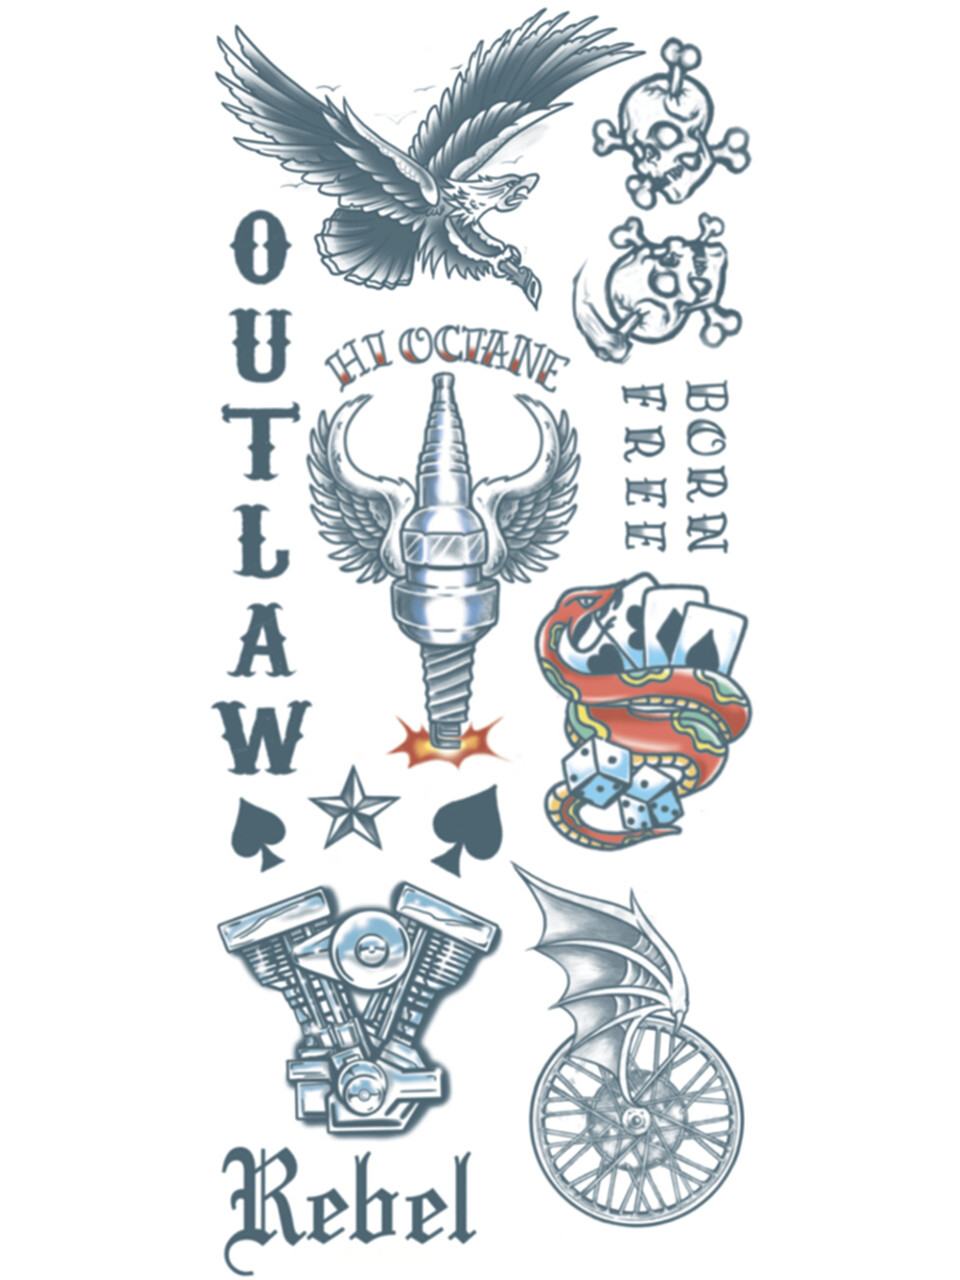 outlaw biker tattoo